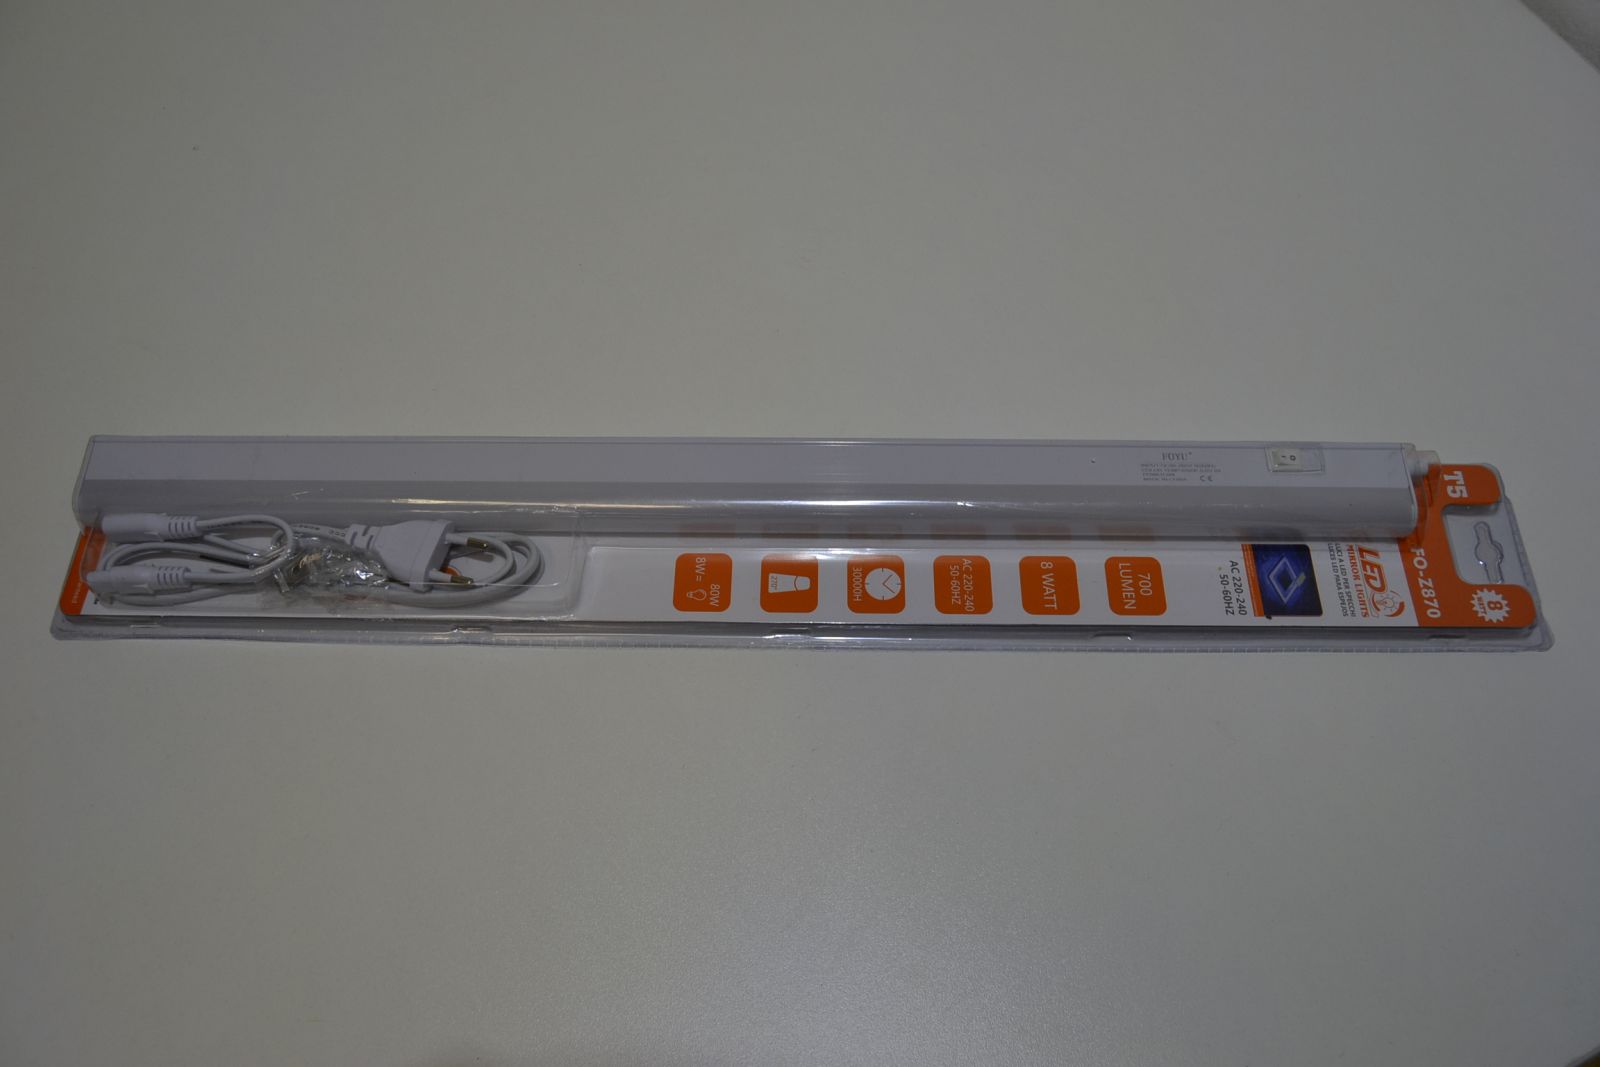 Zářivka pod linku 57 cm, T5 - 8Watt PRC